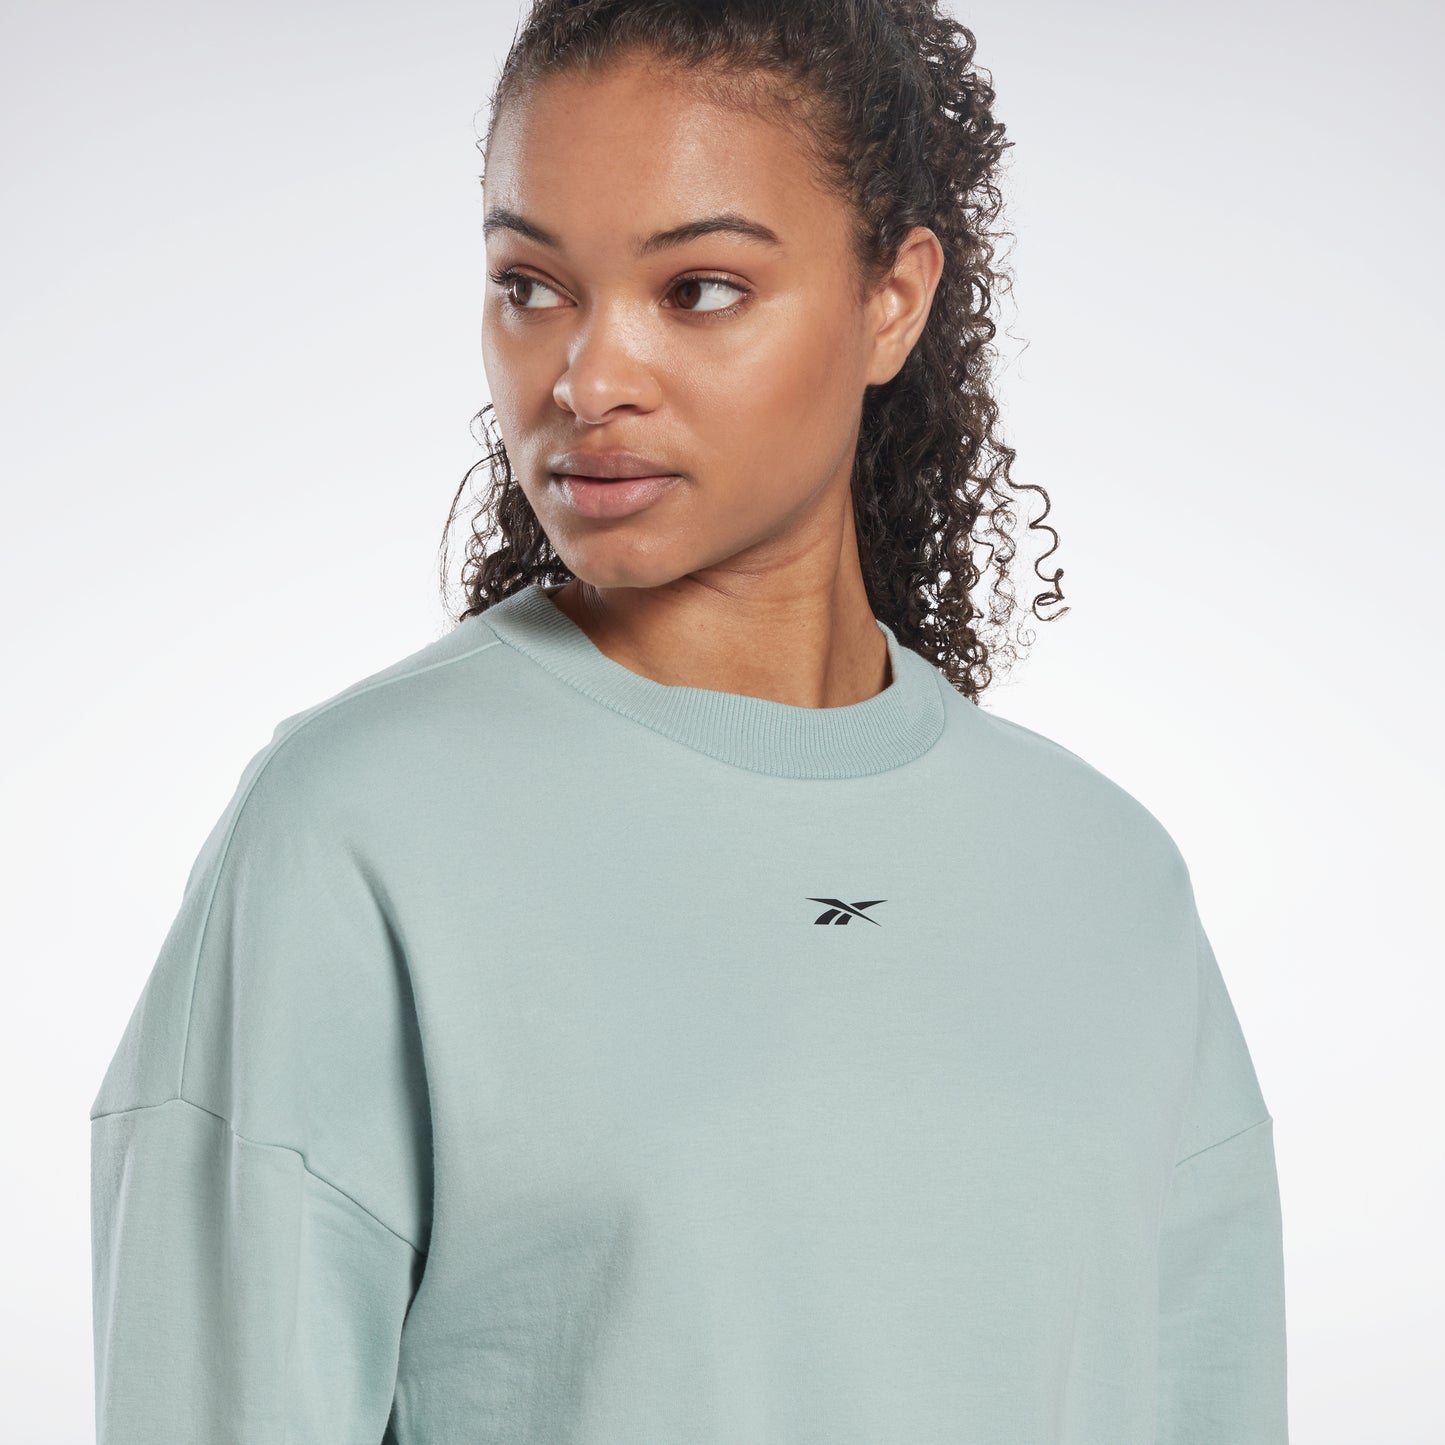 Women's hooded sweatshirt Reebok DreamBlend Cotton Midlayer - Textile -  Running - Physical maintenance